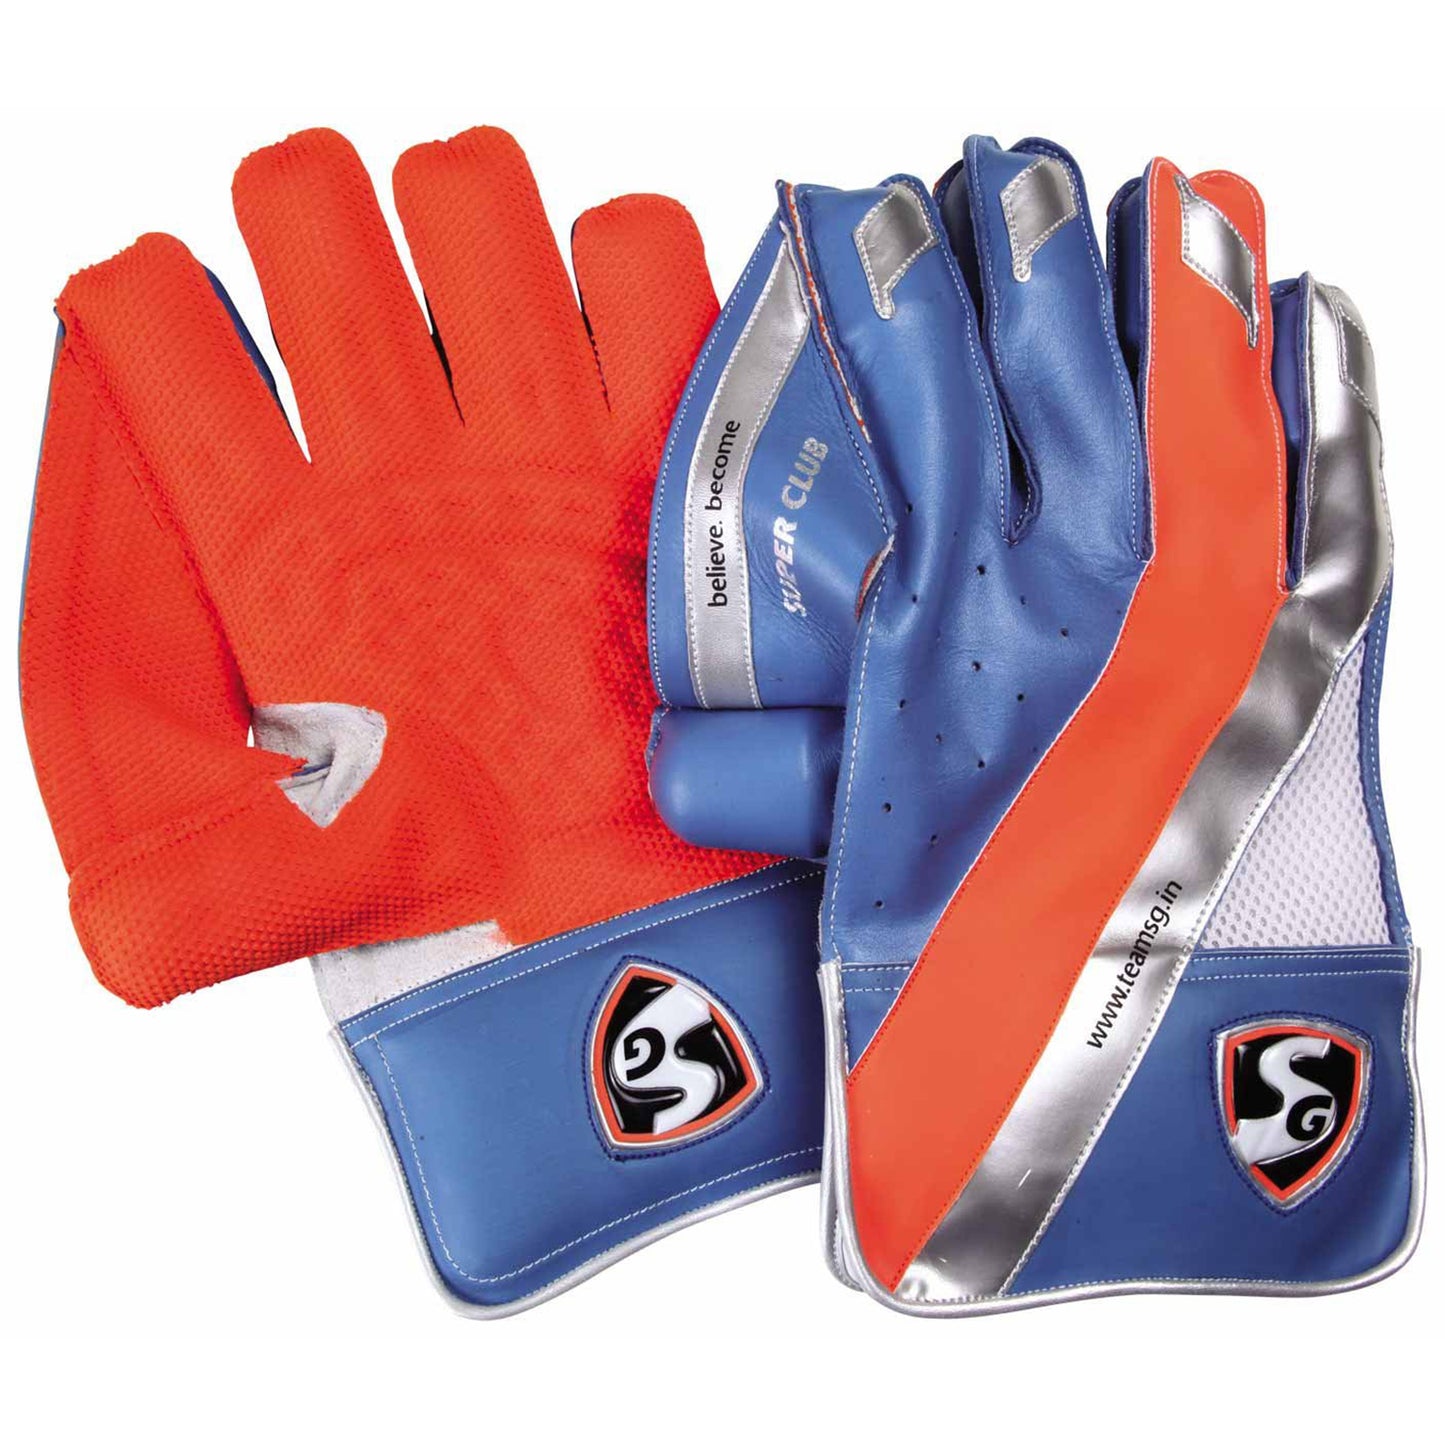 SG Super Club Wicket Keeping Gloves - Best Price online Prokicksports.com